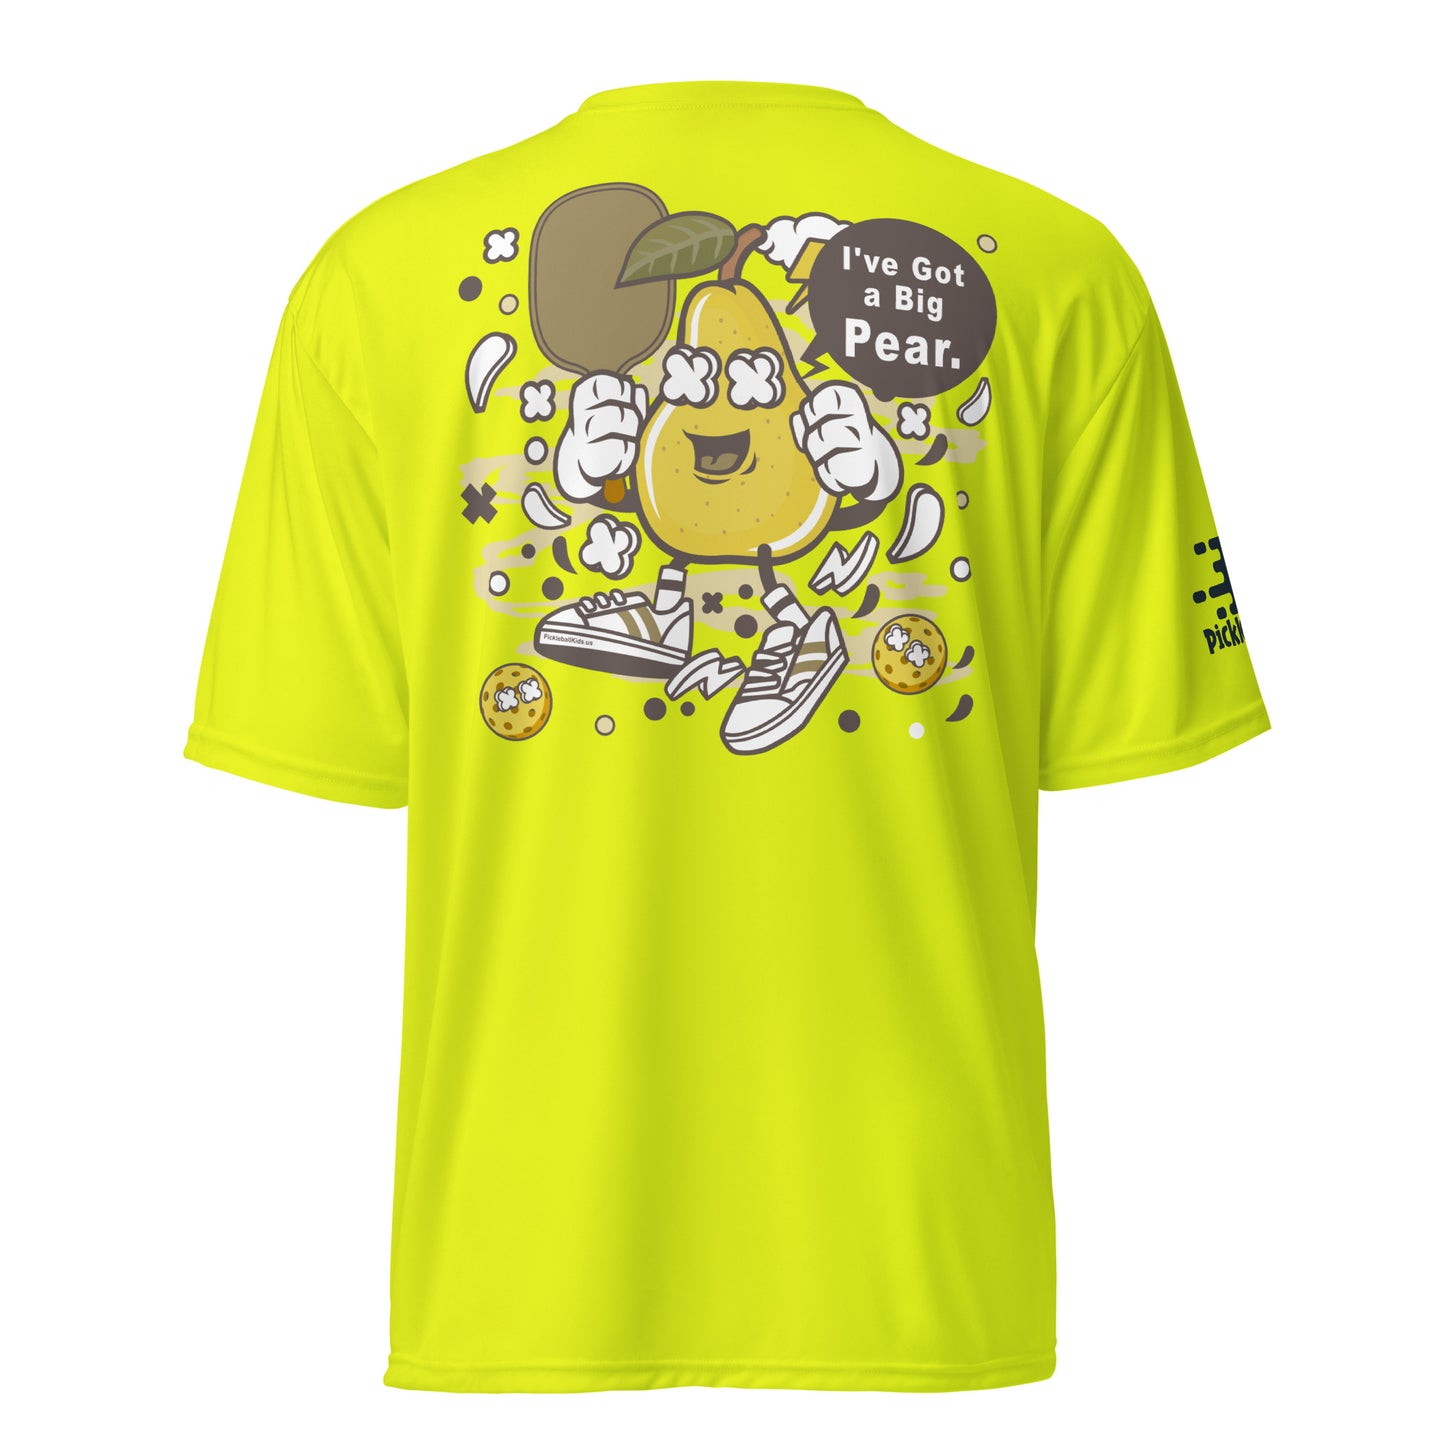 "I've Got A Big Pear" Unisex Performance Crew Neck T-Shirt